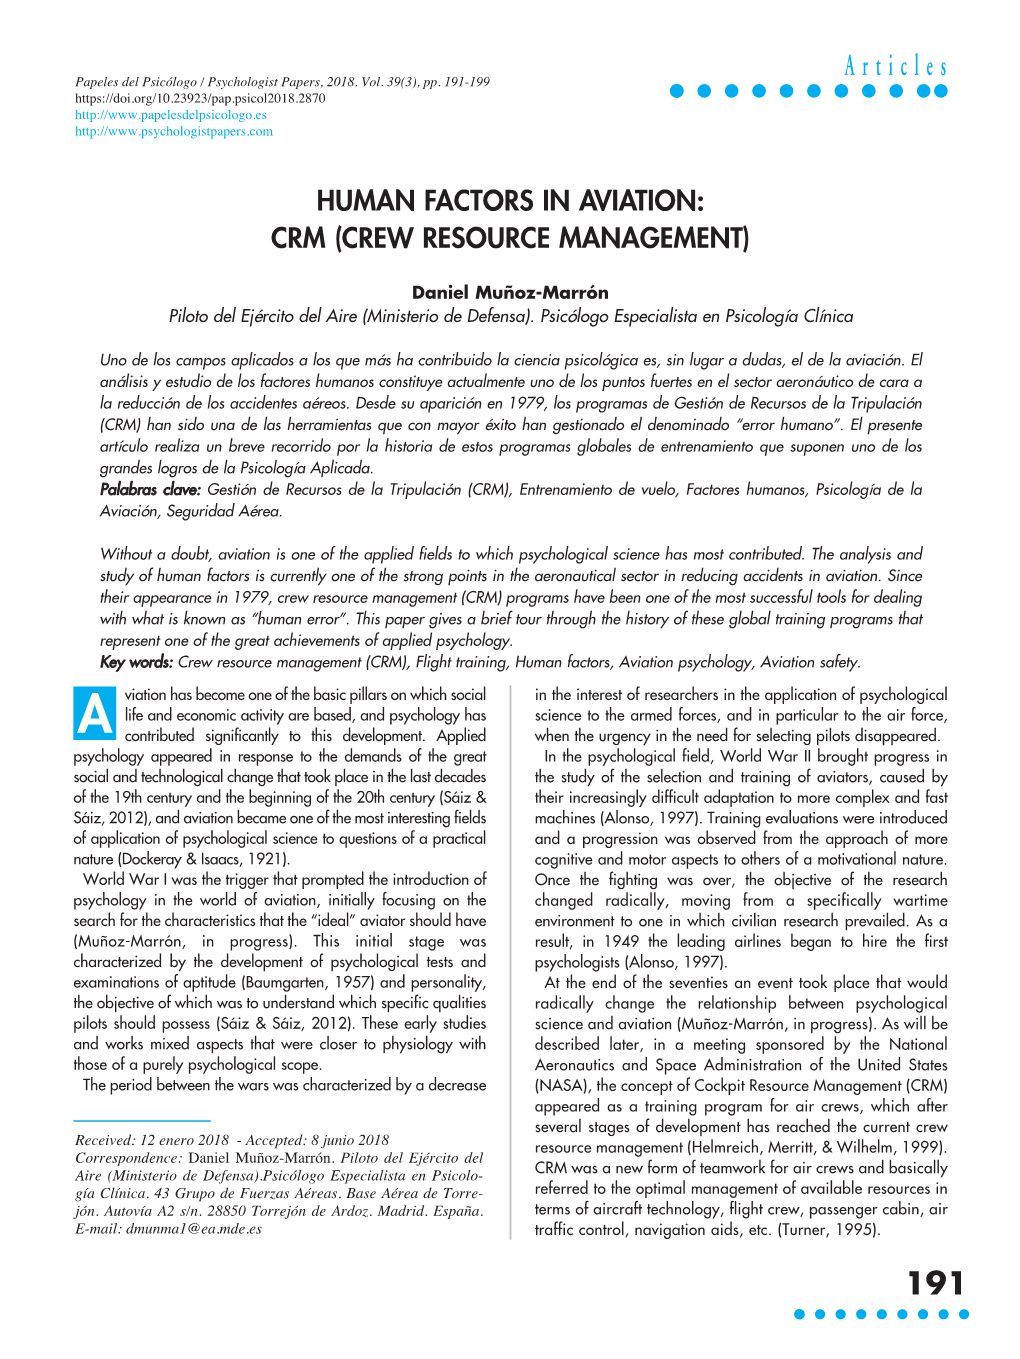 Human Factors in Aviation: Crm (Crew Resource Management)